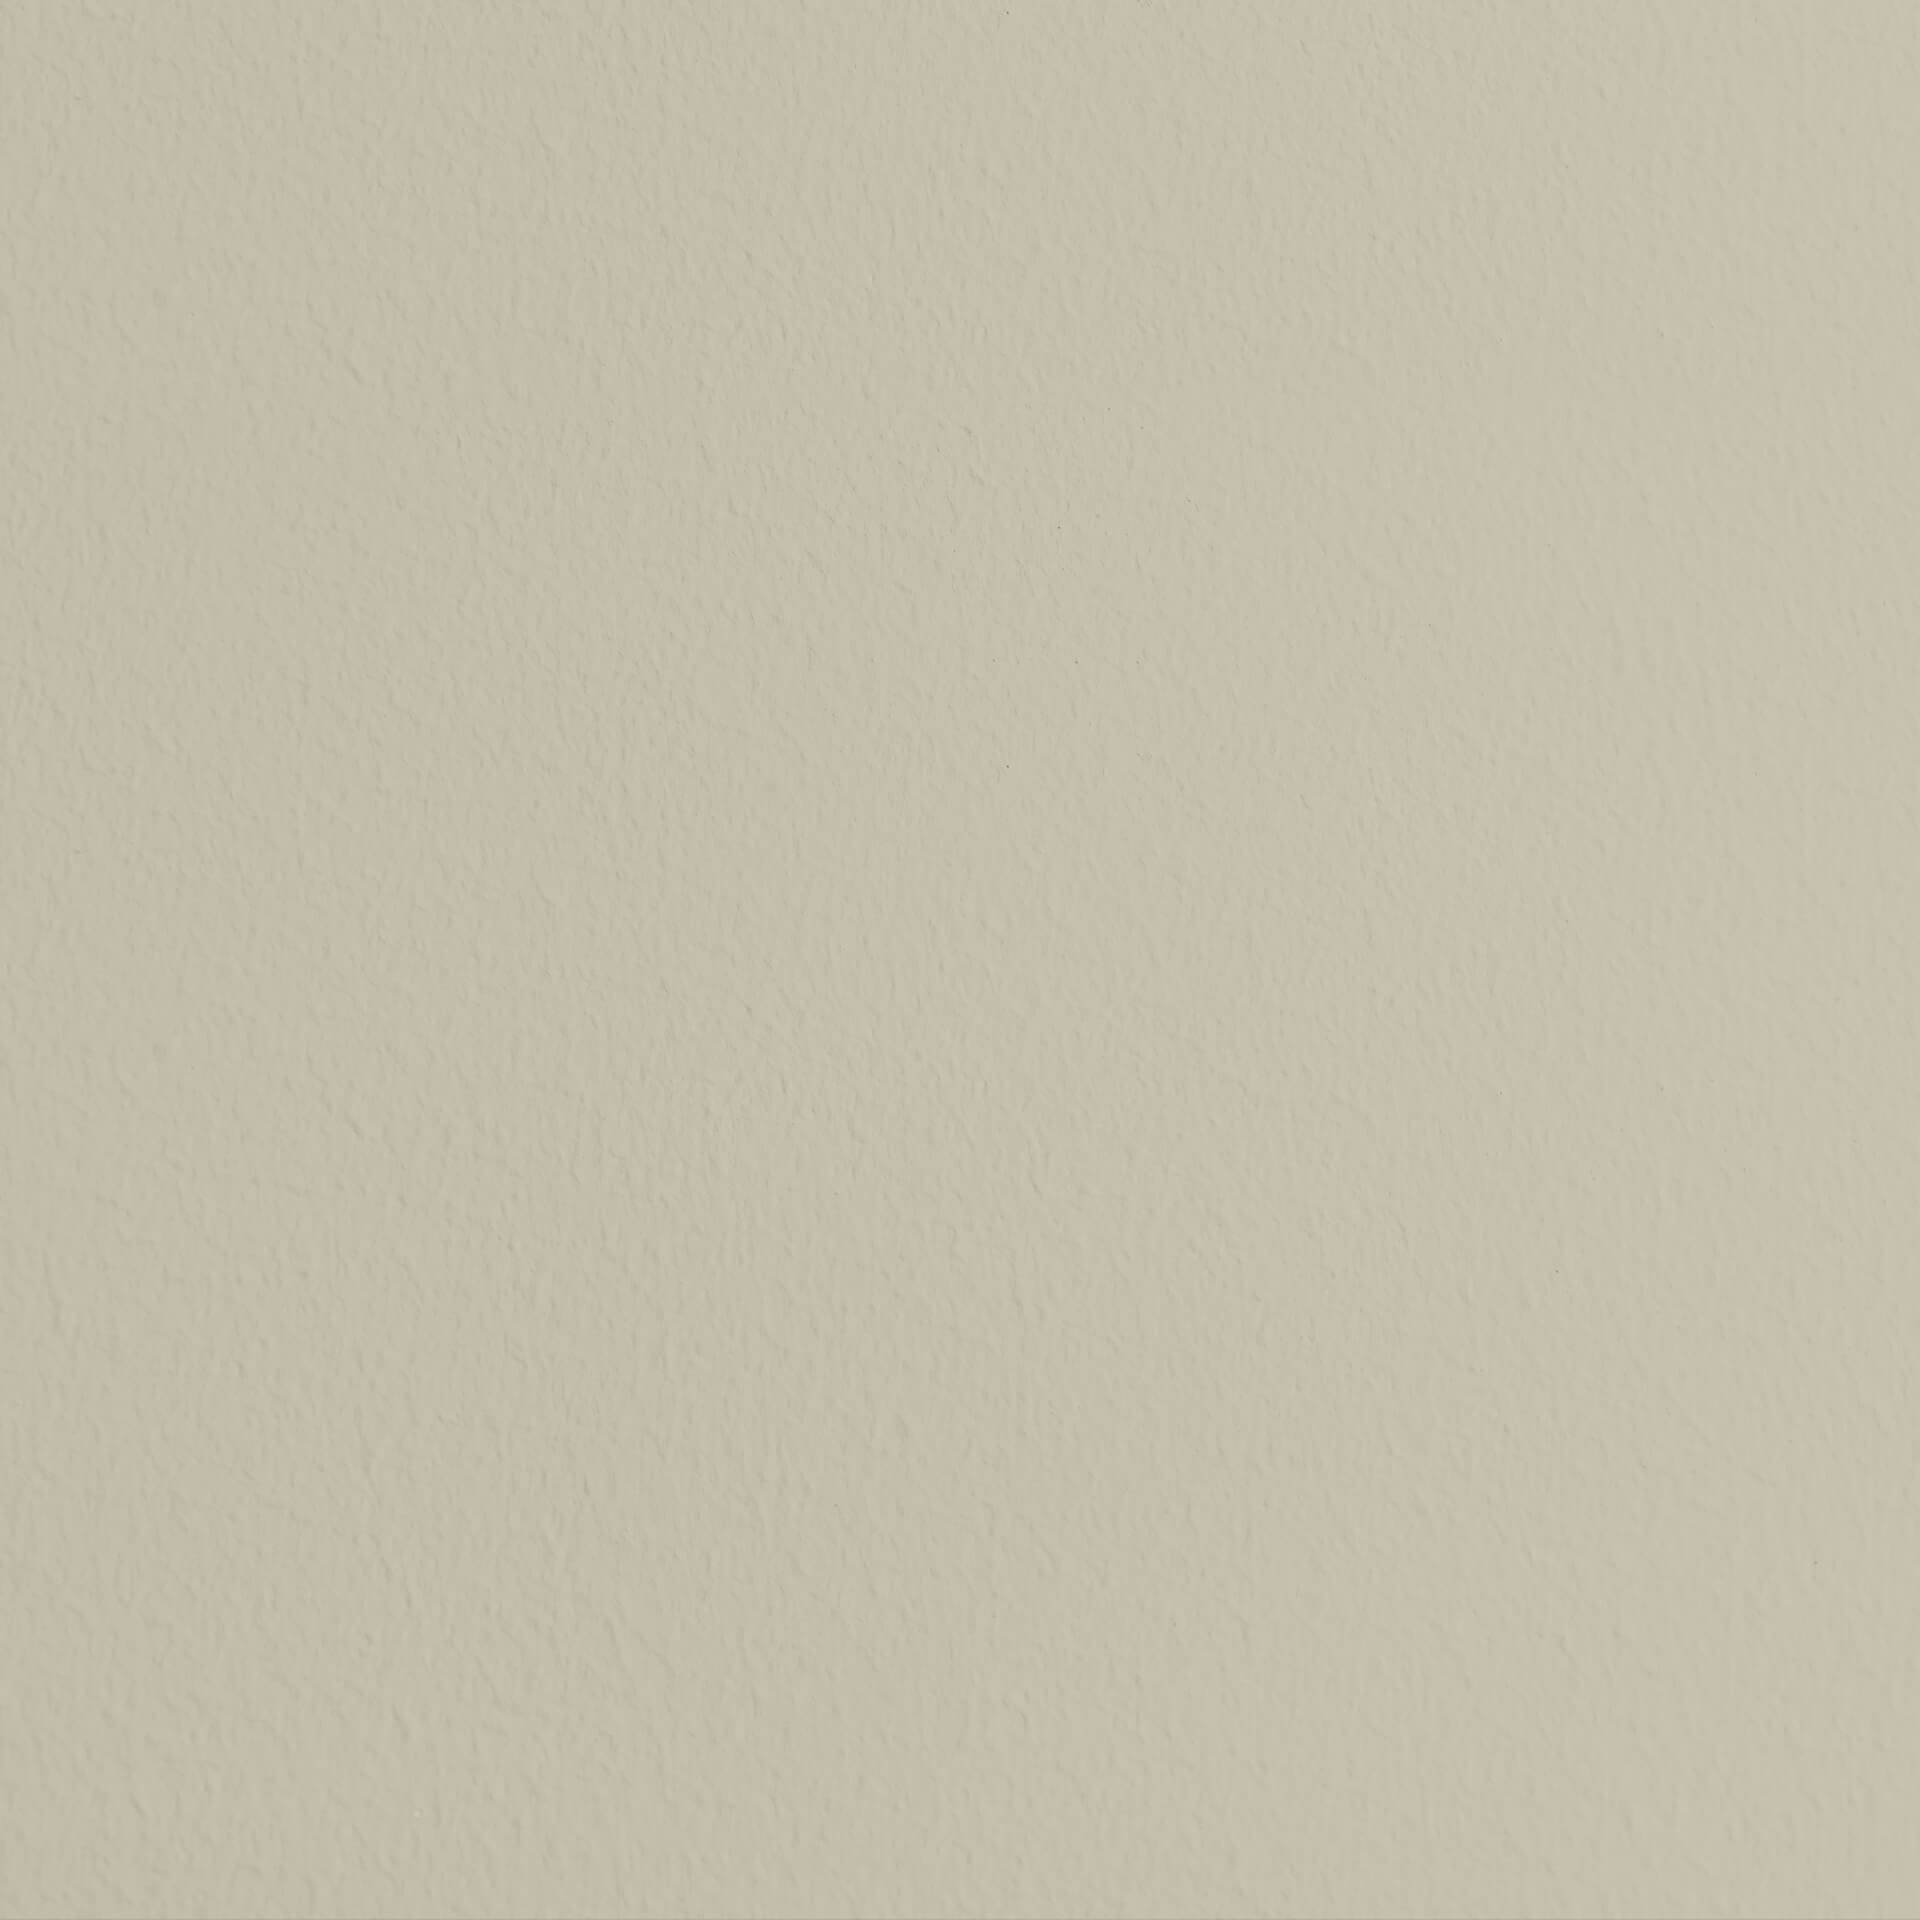 Mylands Flanders Grey No. 110 - Marble Matt Emulsion / Wandfarbe, 2.5L